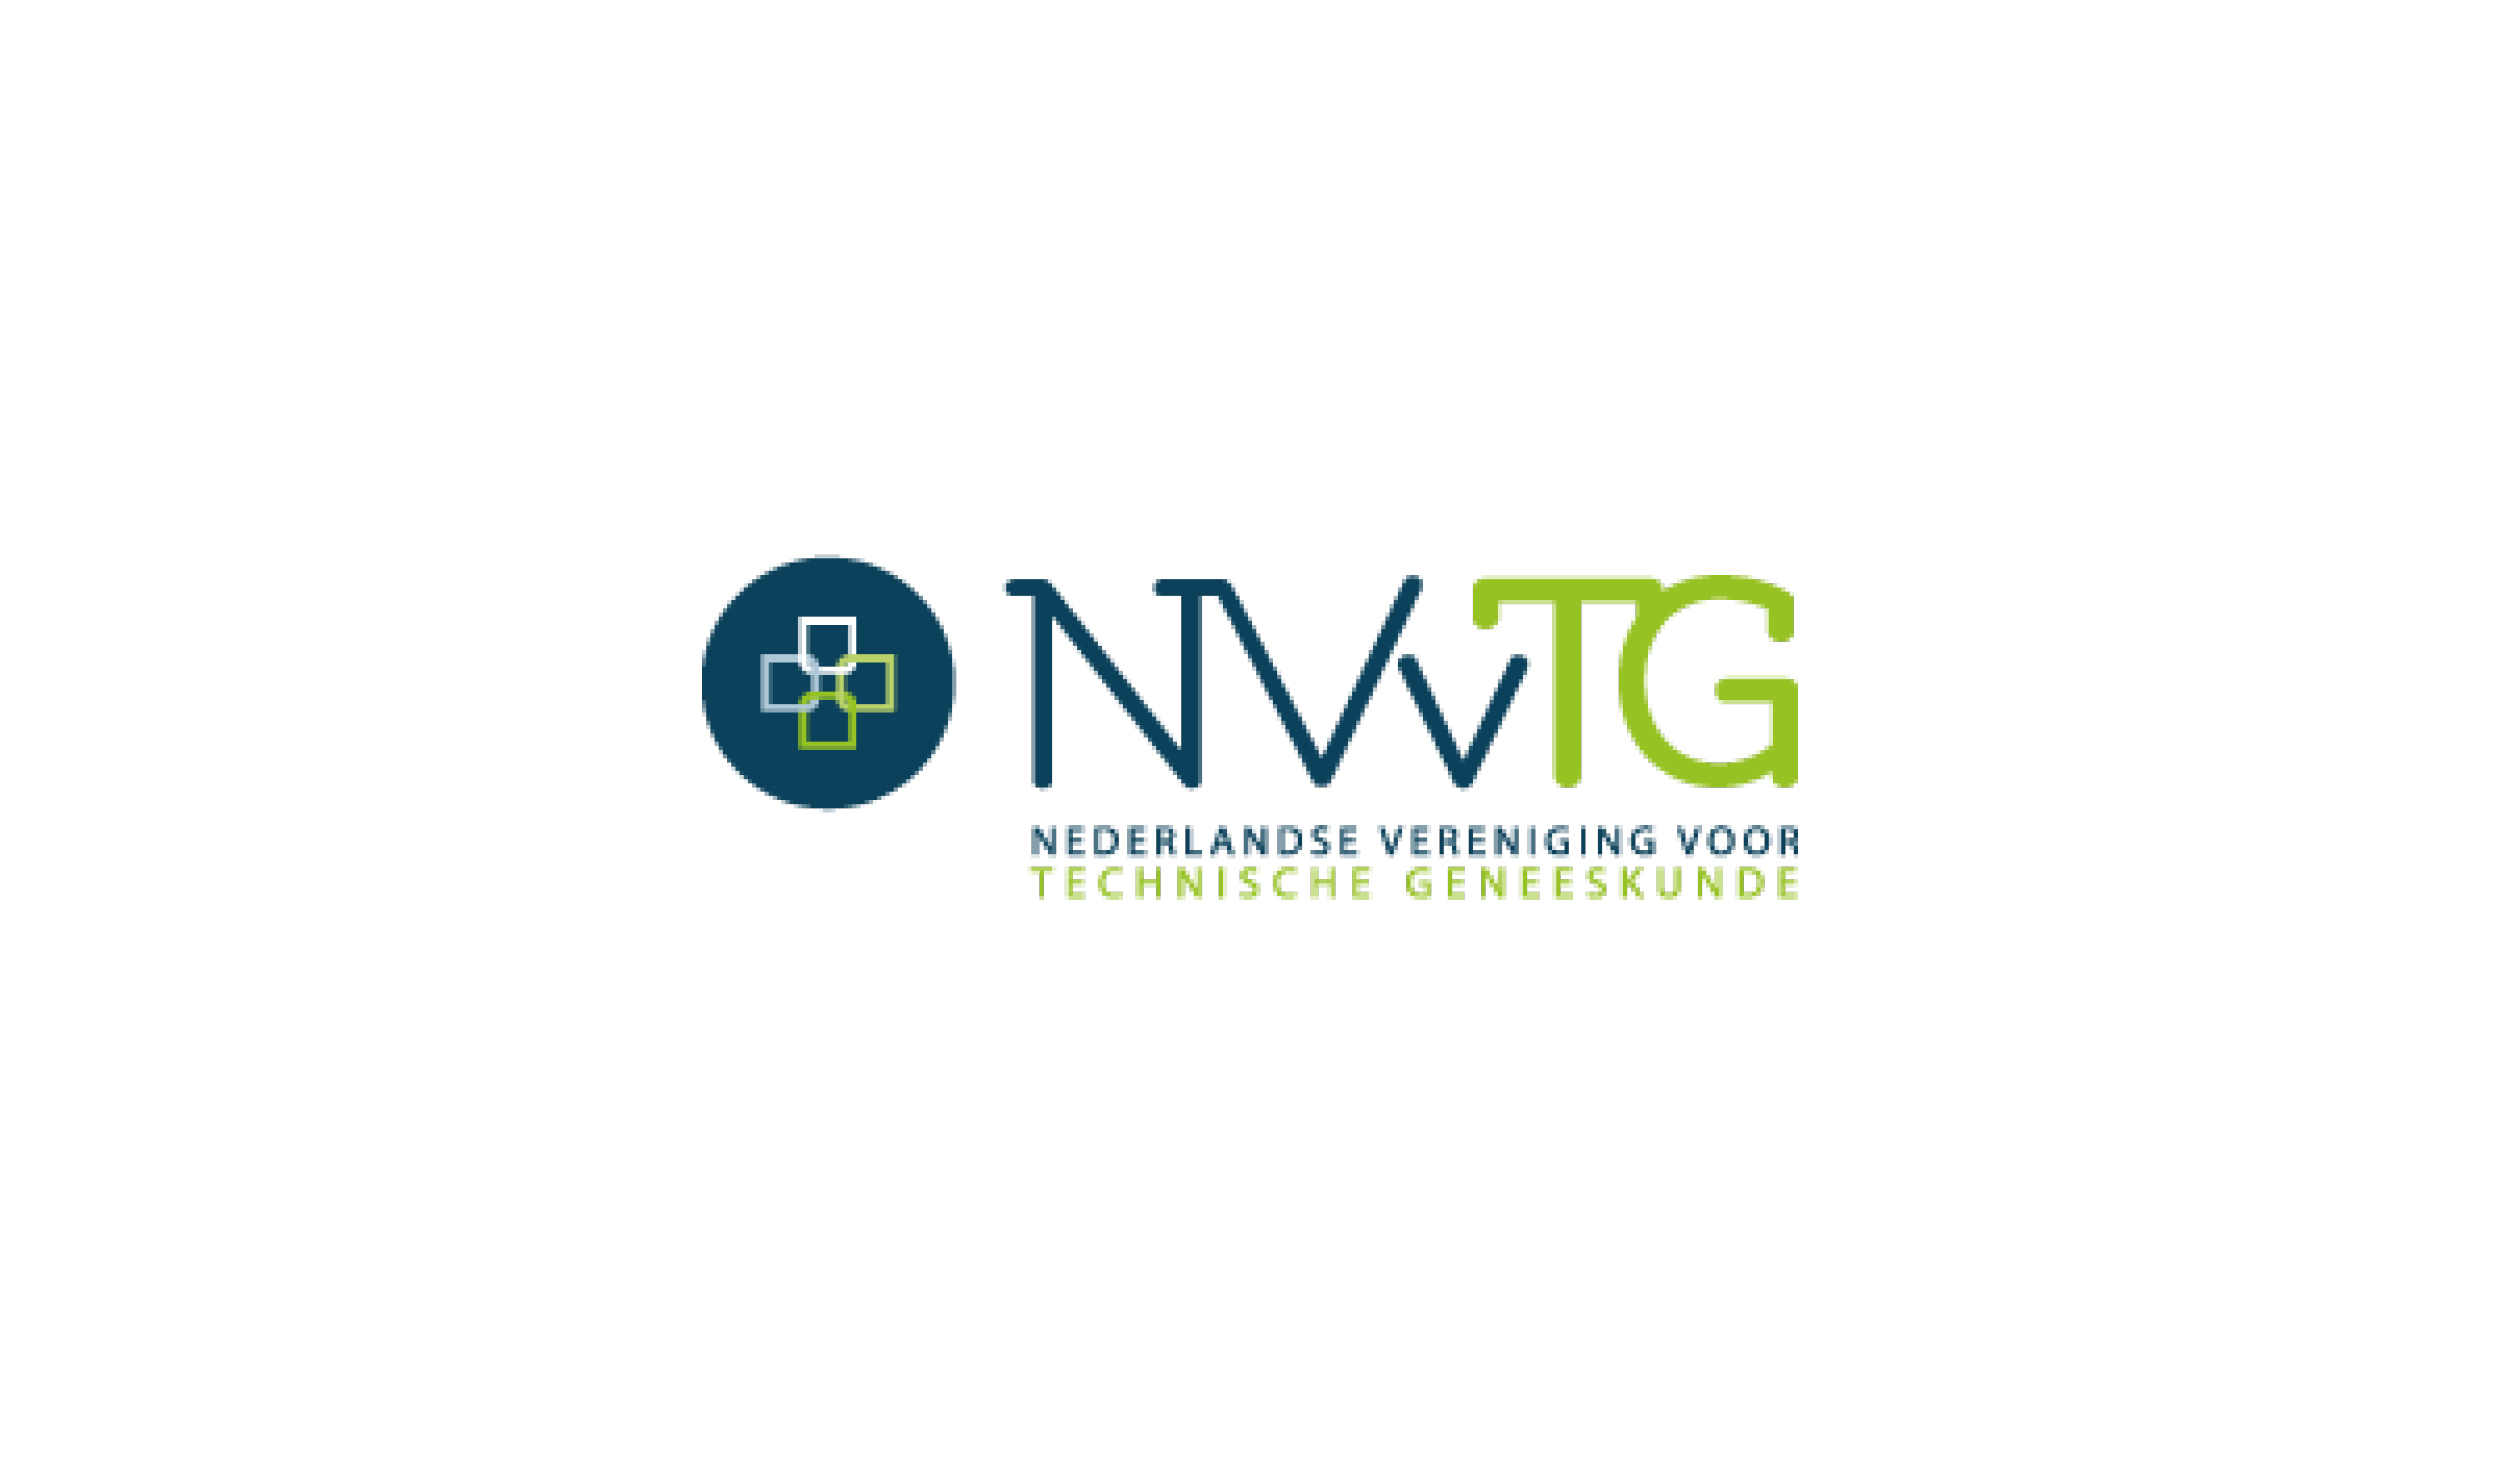 NVvTG logo